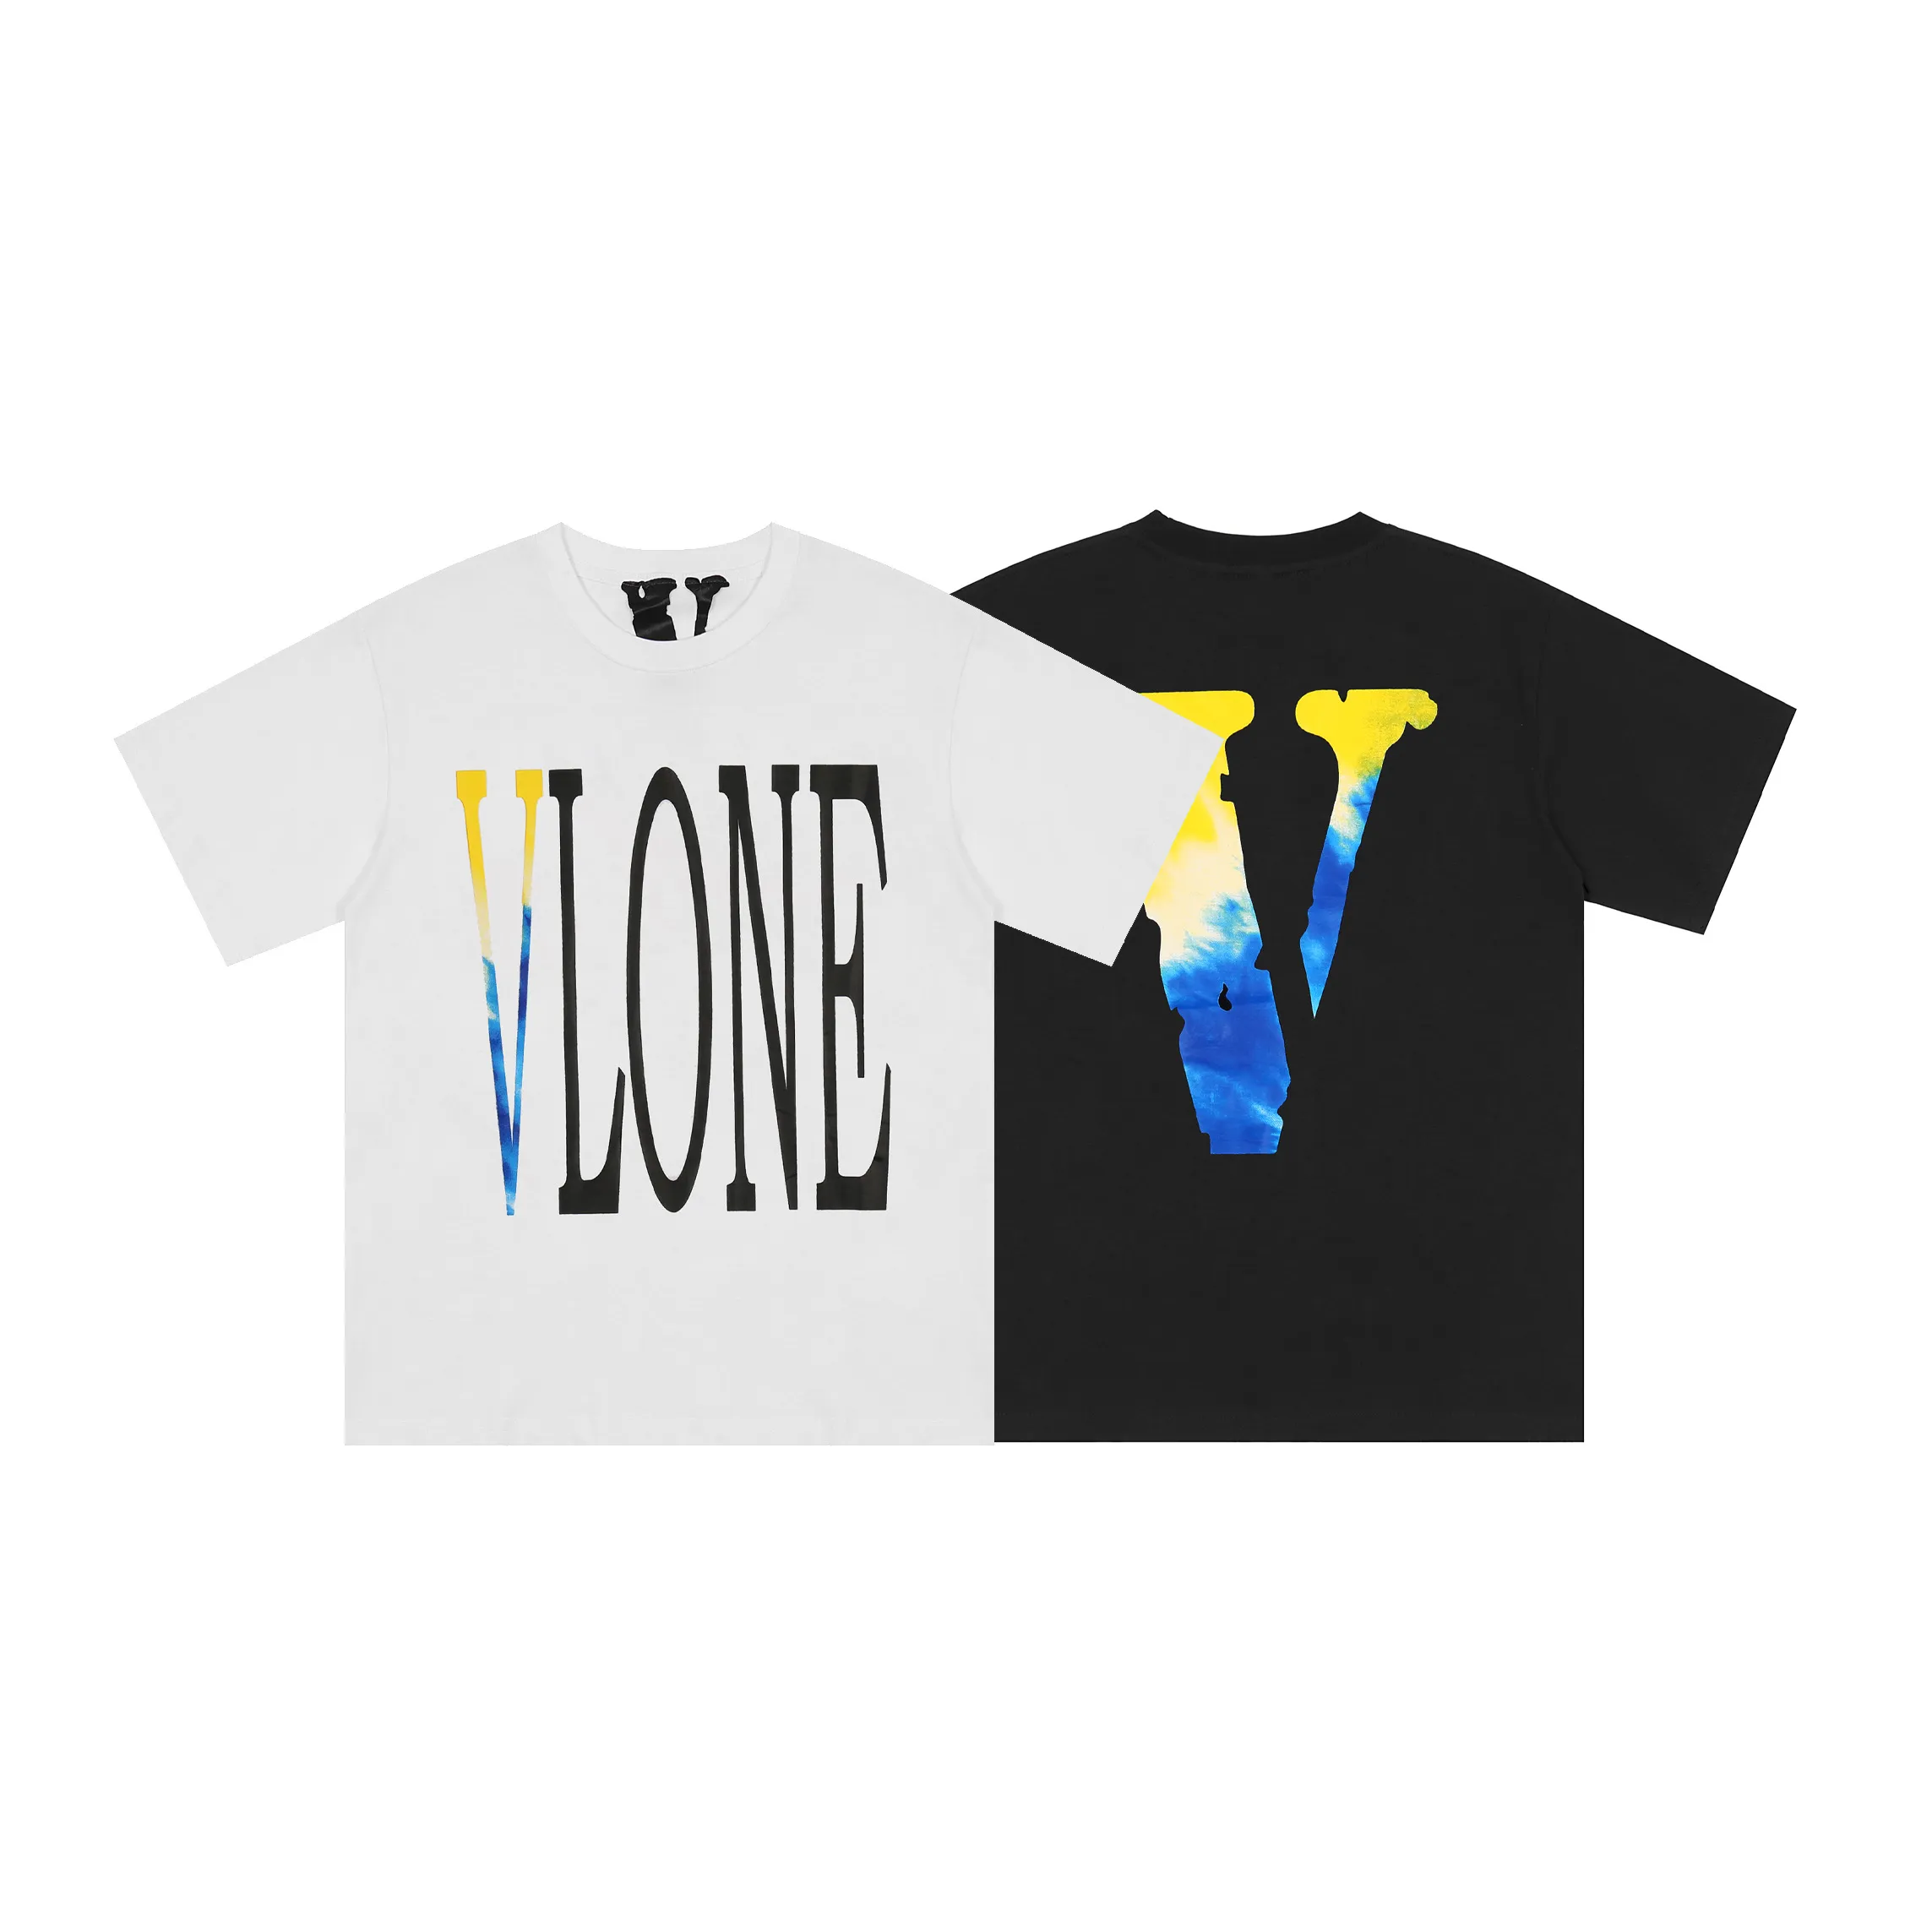 Vlone T-shirt Big "V" Tshirt Men's / Women's Couples Casual Fashion Trend High Street Loose Hip-Hop100% Cotton Printed Round Neck Shirt US Size S-XL 6120